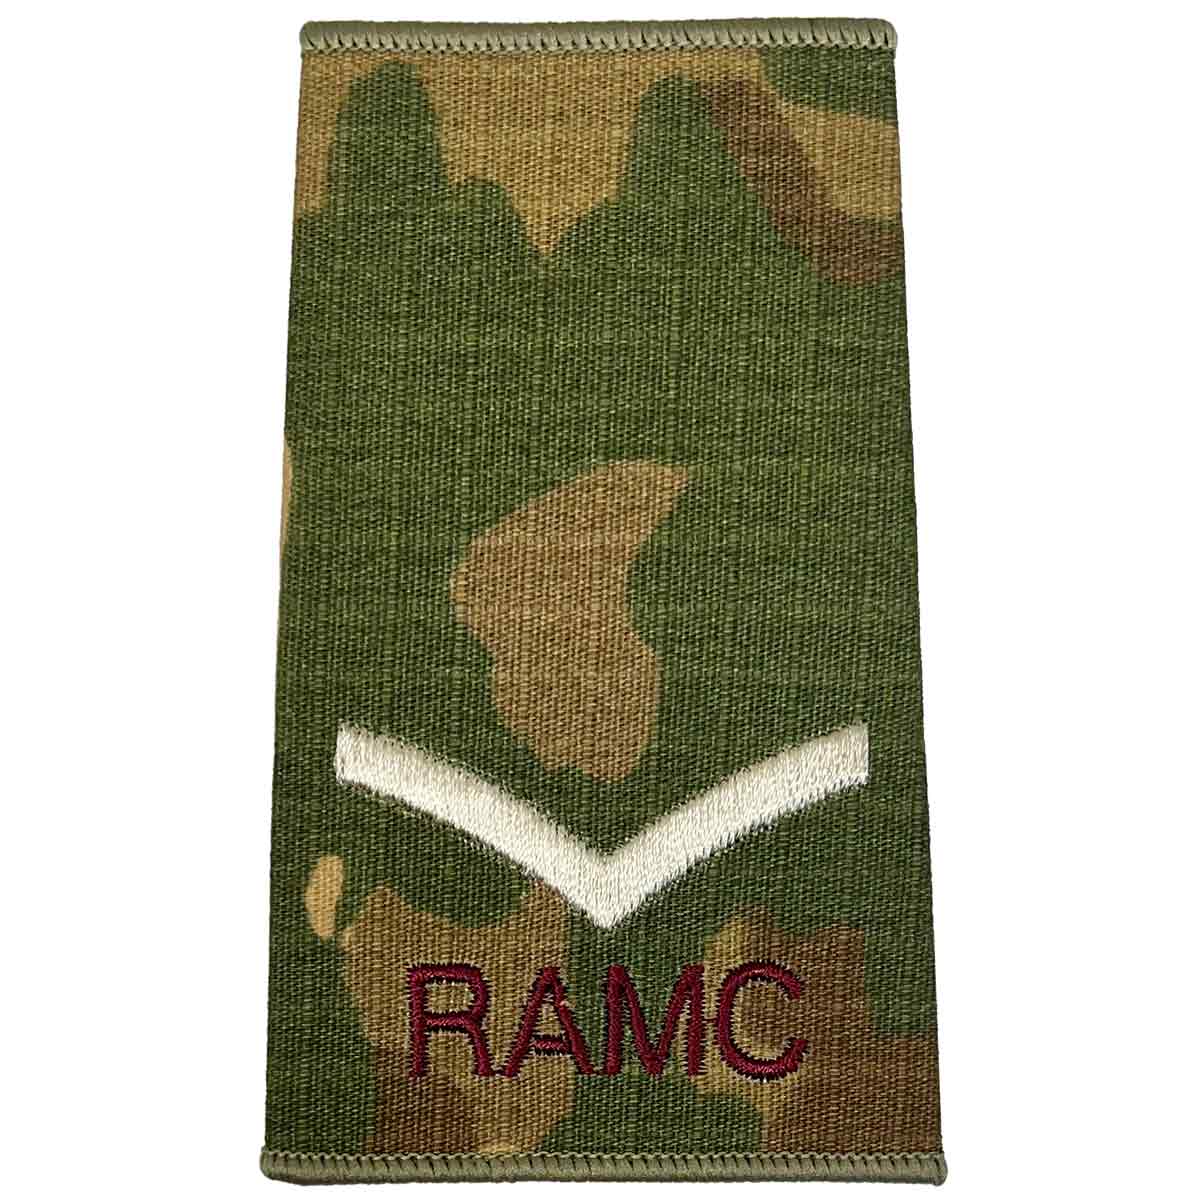 Royal Army Medical Corps Multicam Rank Slides (Pair) - John Bull Clothing